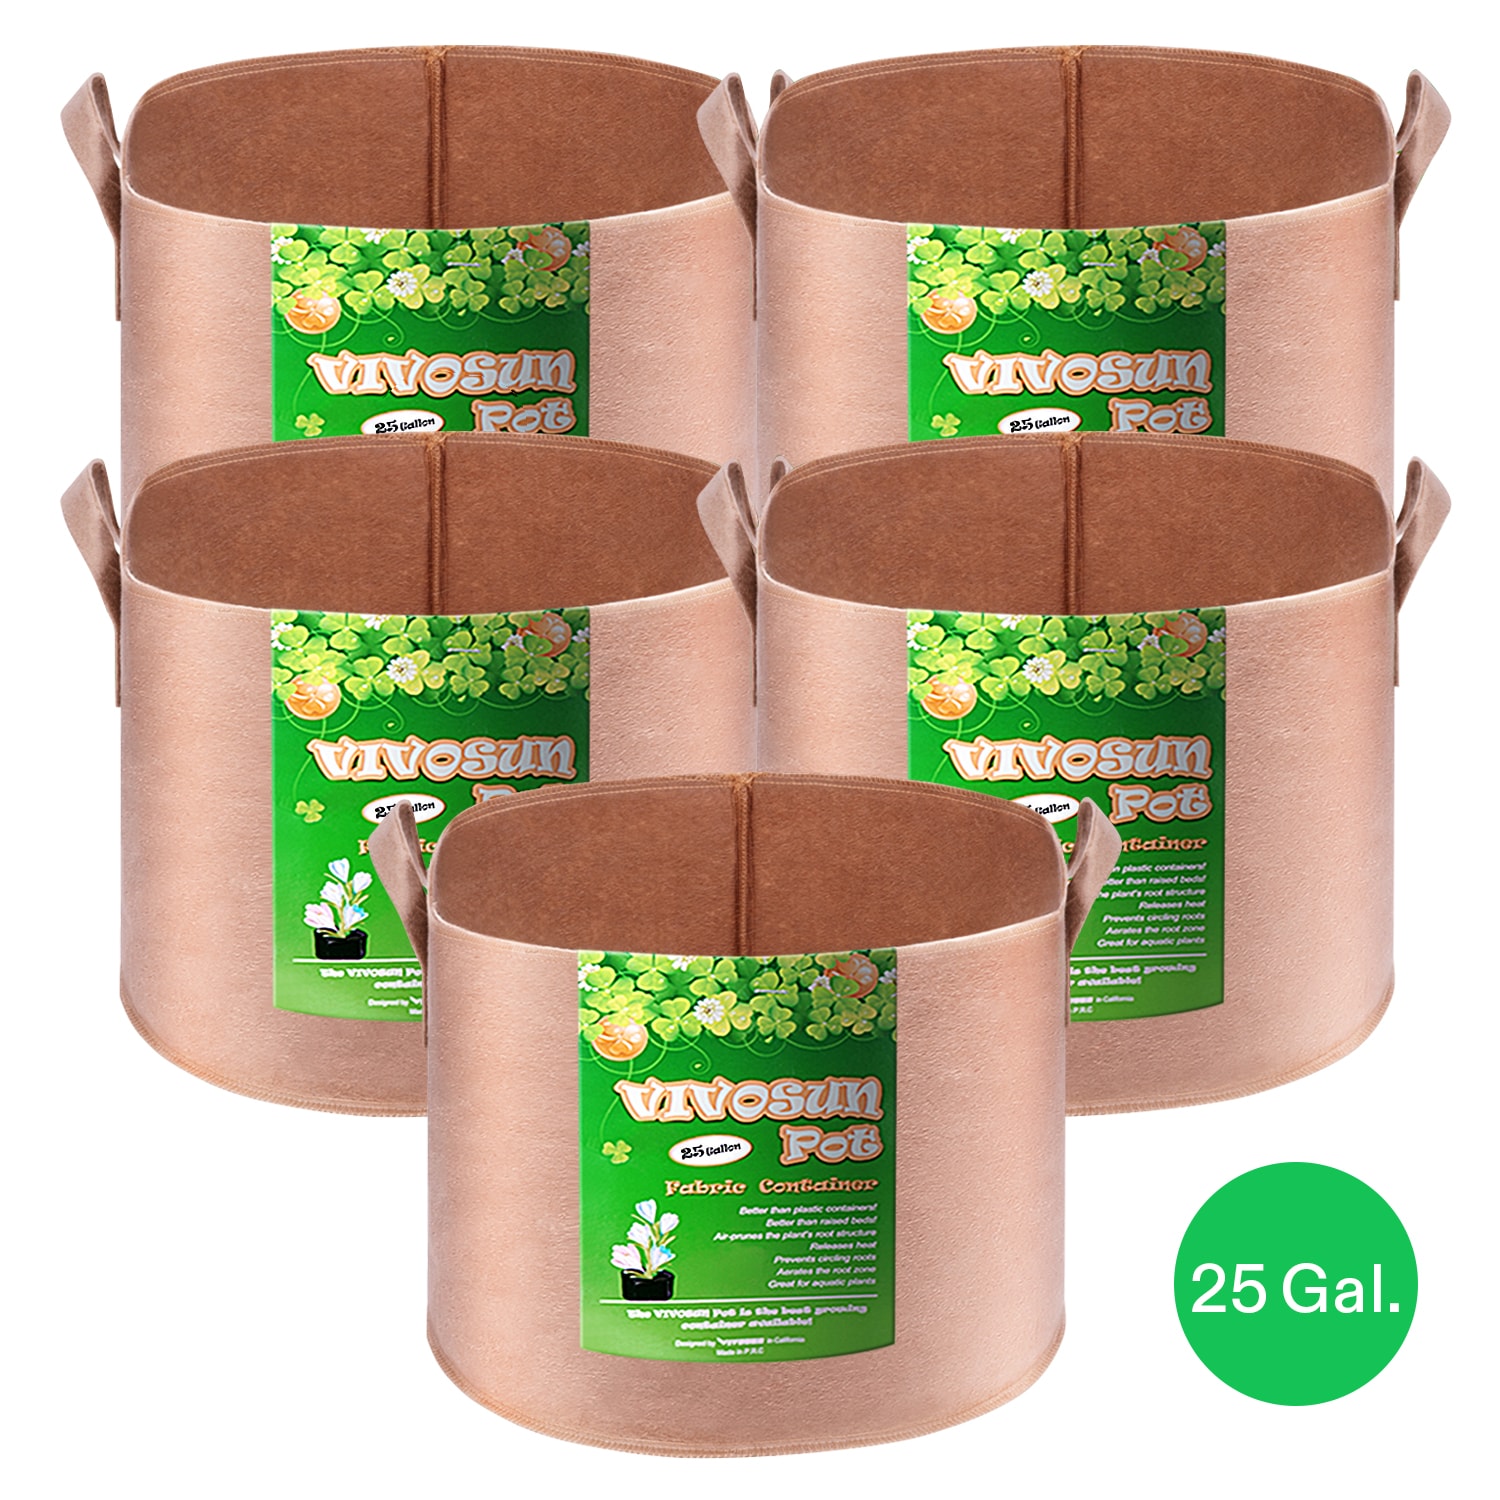  Molgoc 1 Gallon Fabric Pots with Holes,5-Pack,Heavy Duty  Thickened Nonwoven Fabric Pots (1 Gallon) : Patio, Lawn & Garden